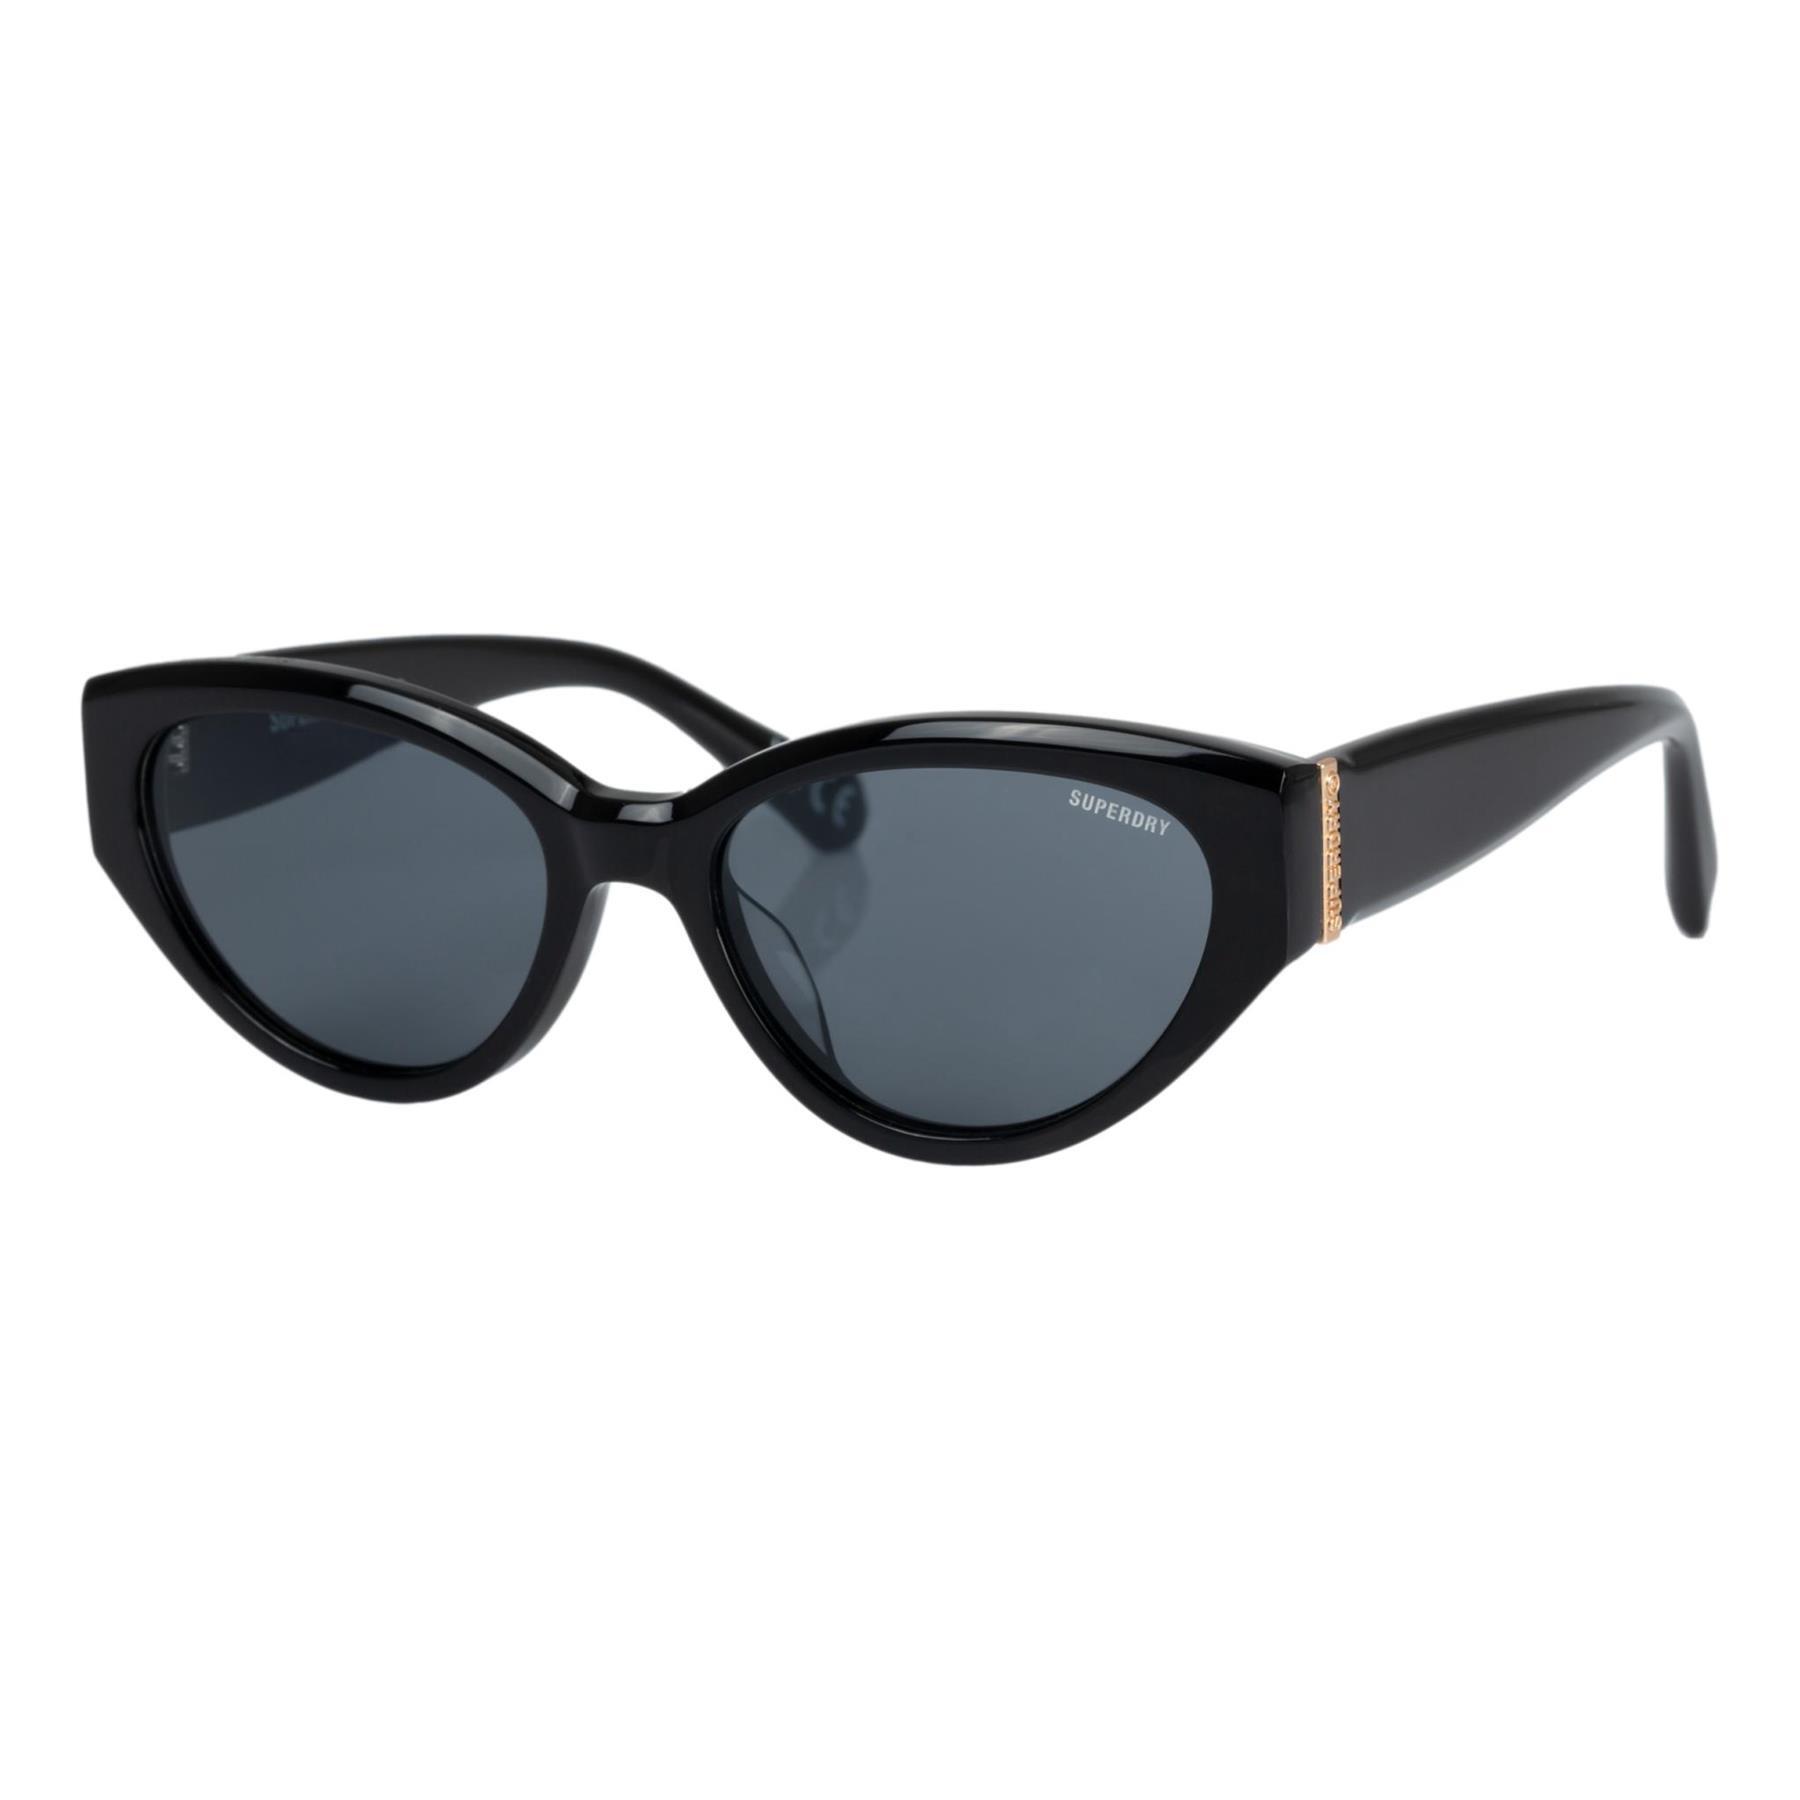 Superdry 5013 Sunglasses - Shiny Black 1/2